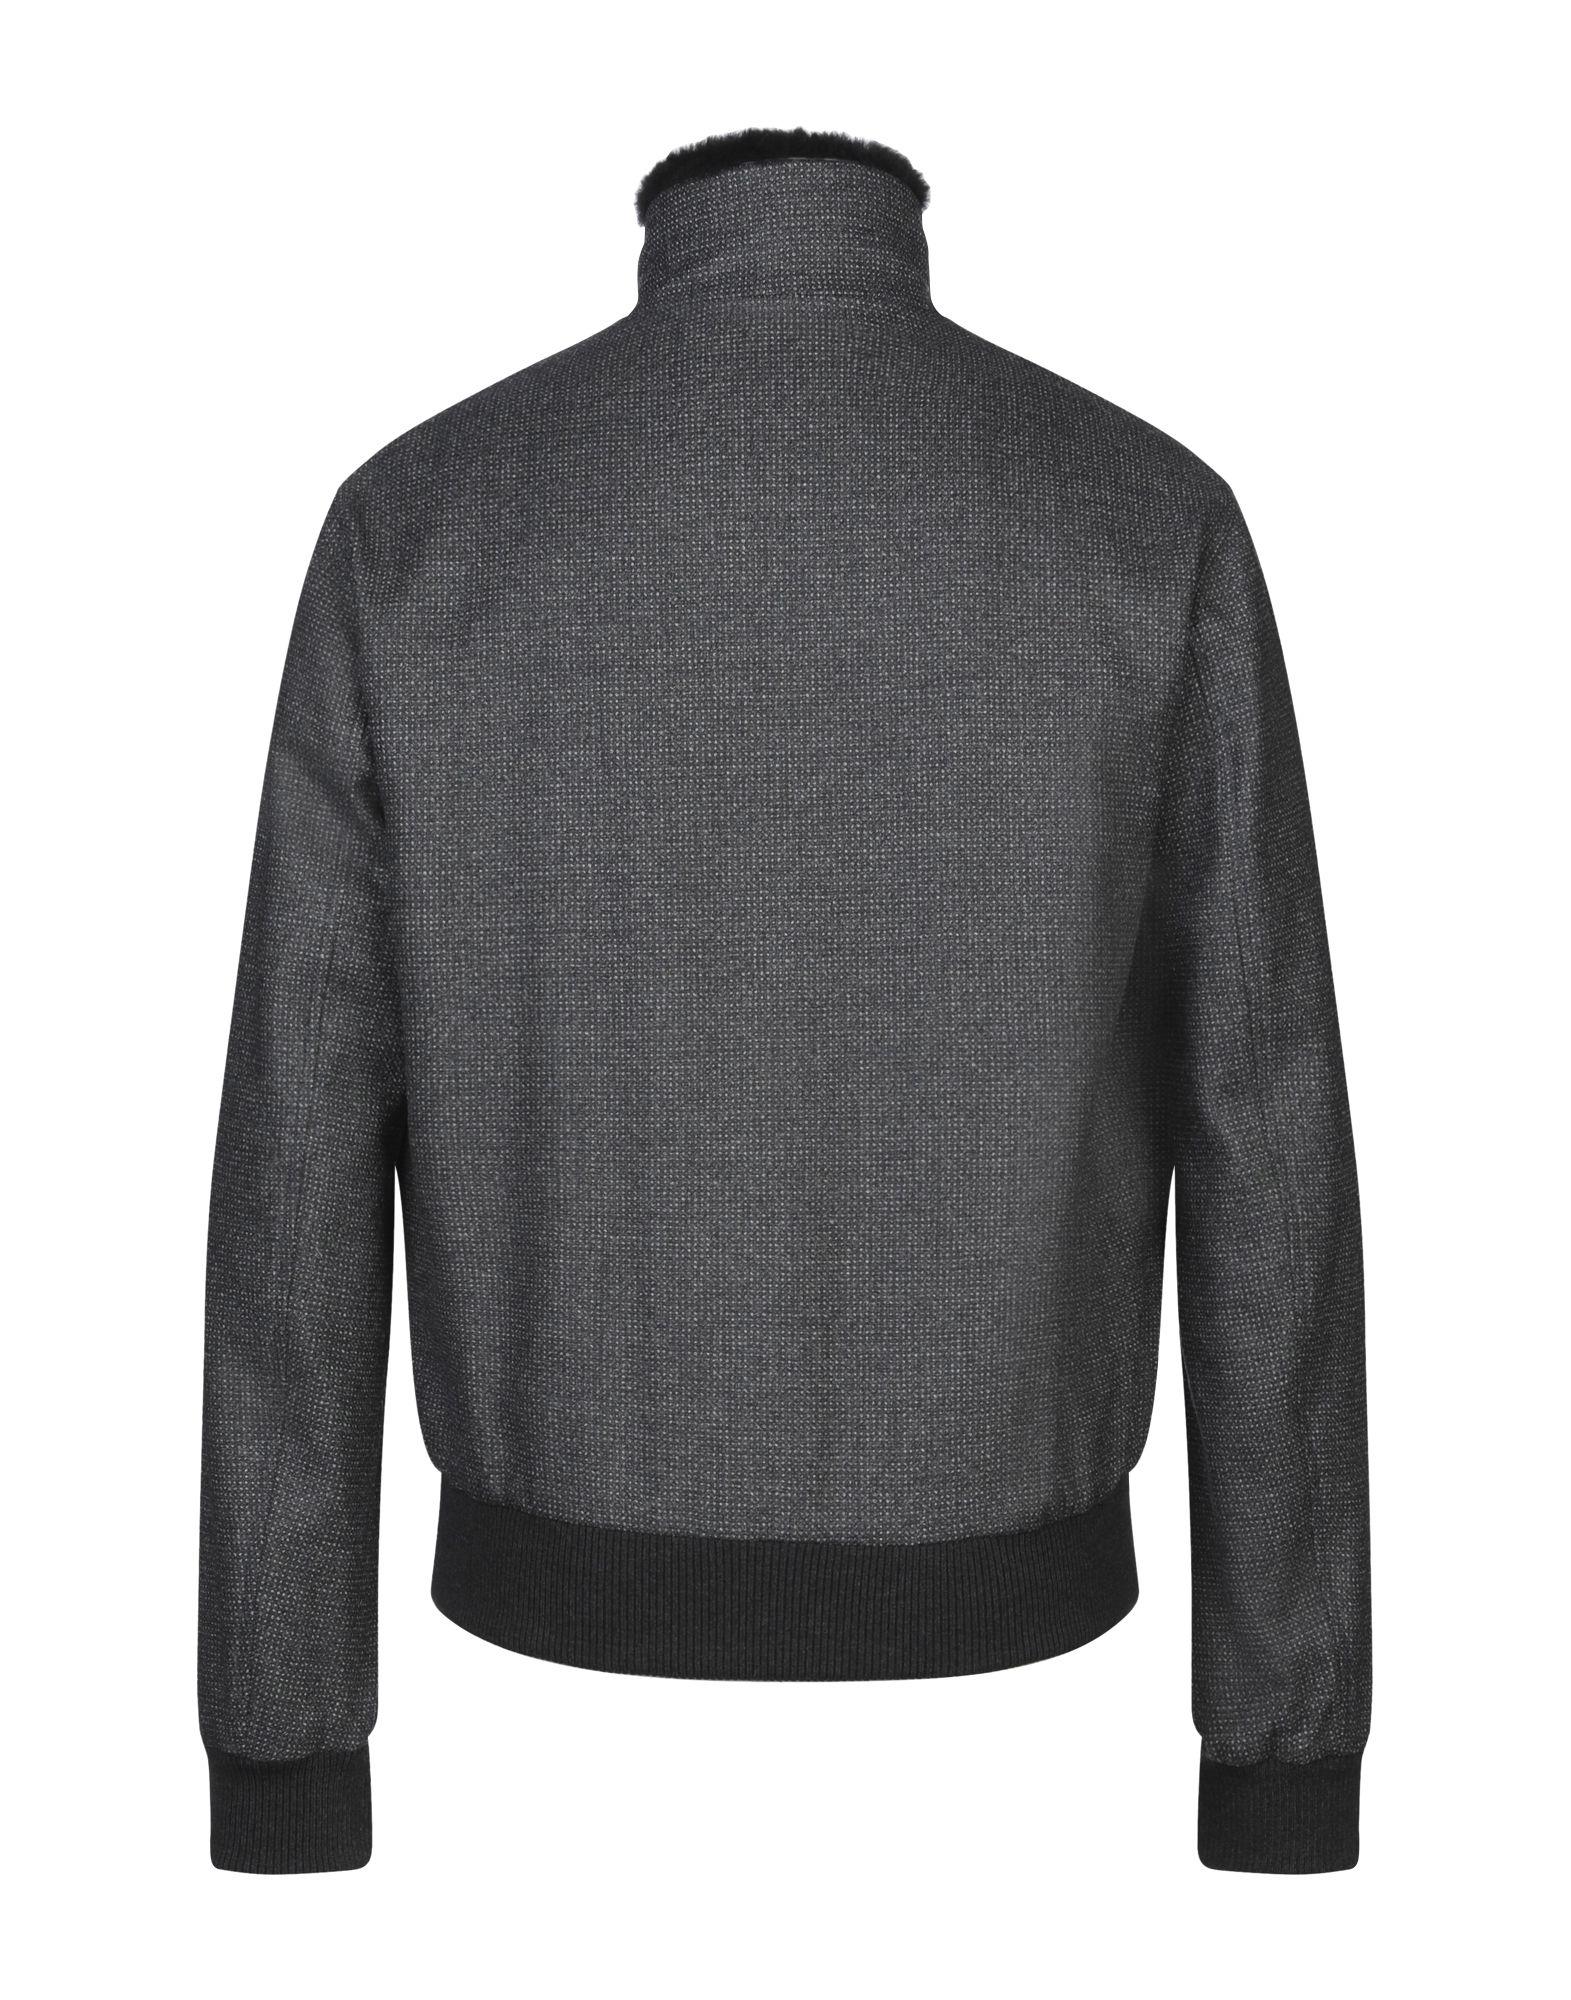 Tombolini Wool Jacket in Steel Grey (Gray) for Men - Lyst